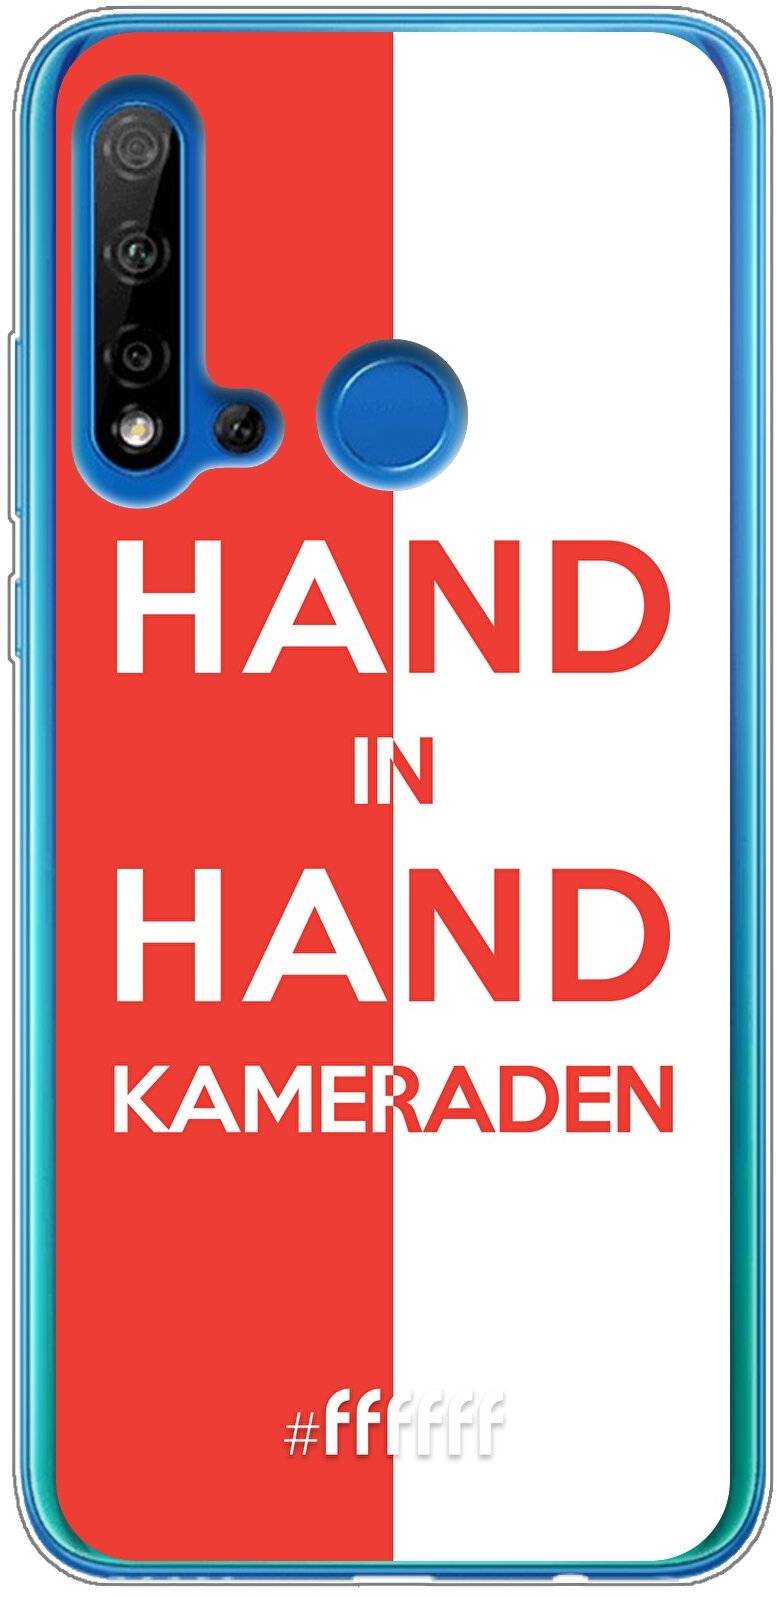 Feyenoord - Hand in hand, kameraden P20 Lite (2019)